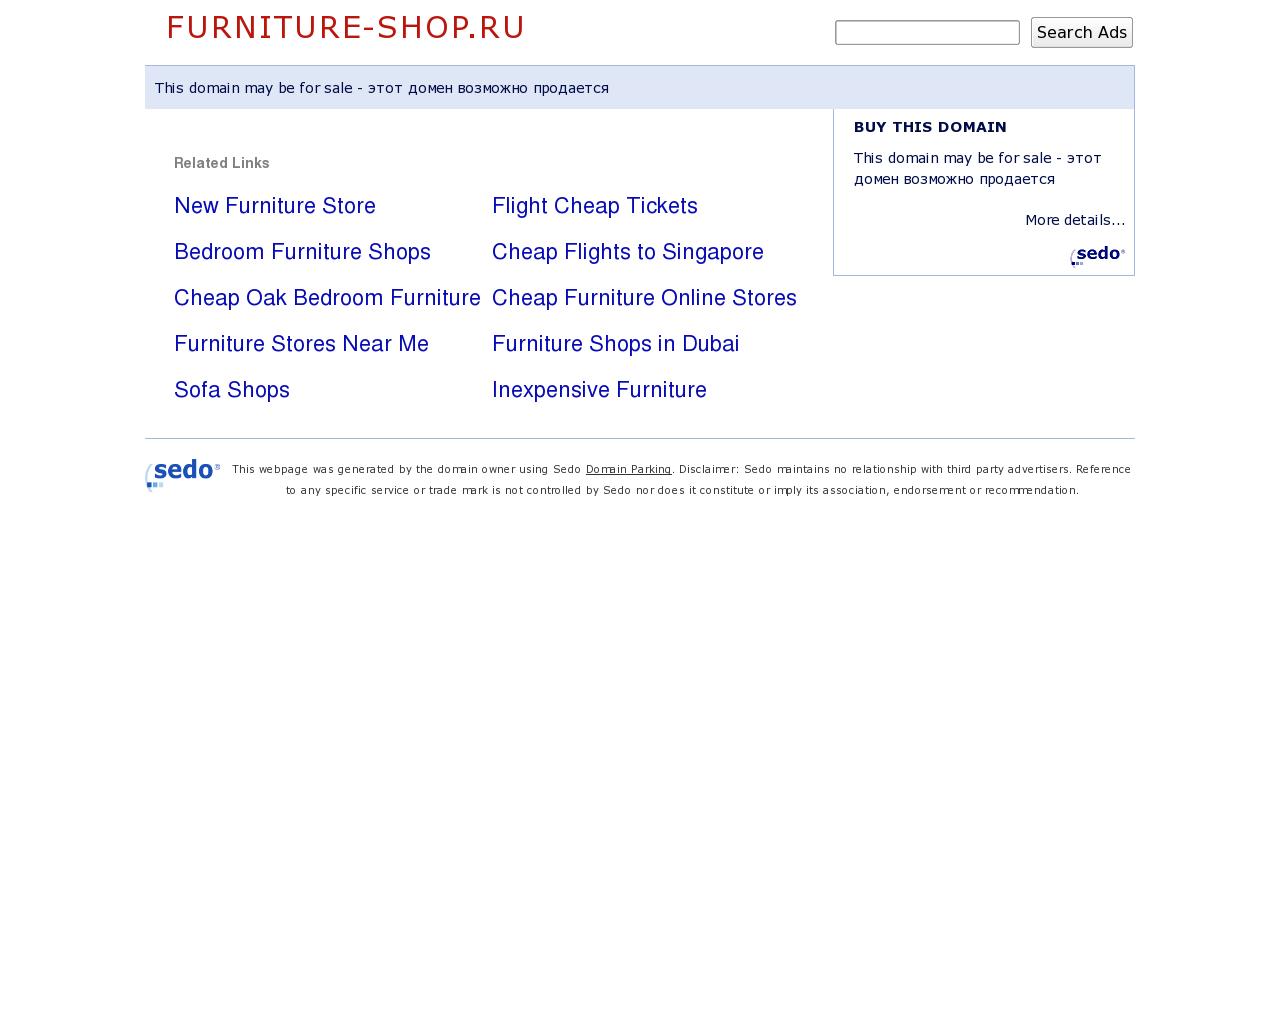 Изображение сайта furniture-shop.ru в разрешении 1280x1024